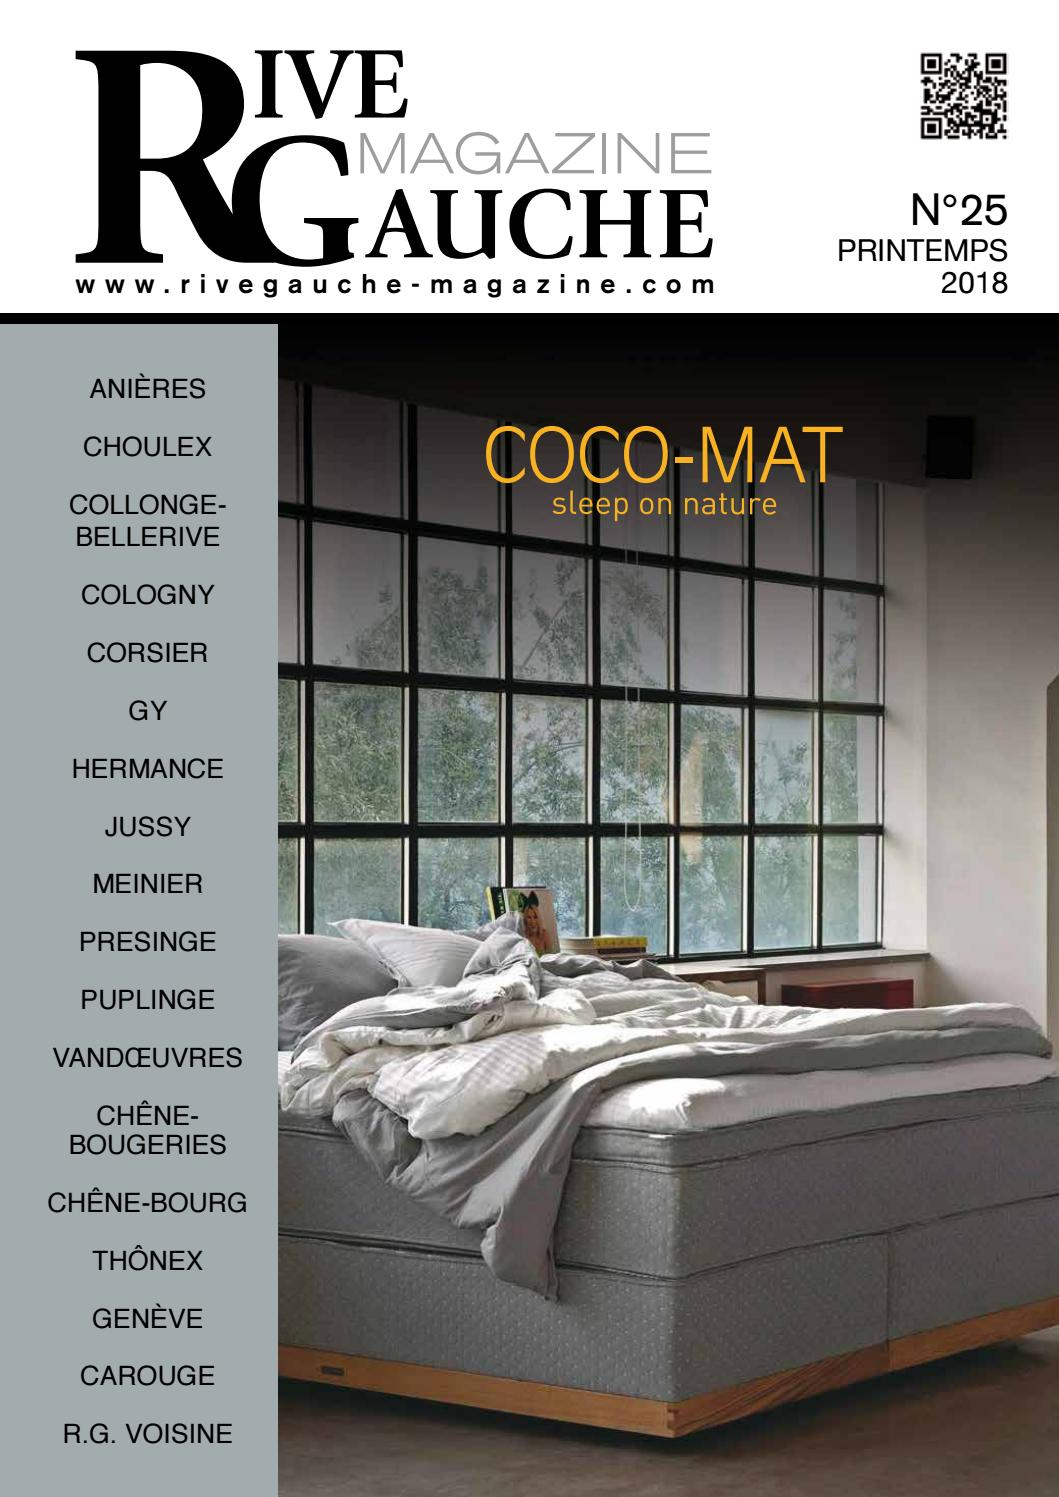 Rive Gauche Magazine N°25 By Daniel - Issuu intérieur Piscine Bellerive Horaire